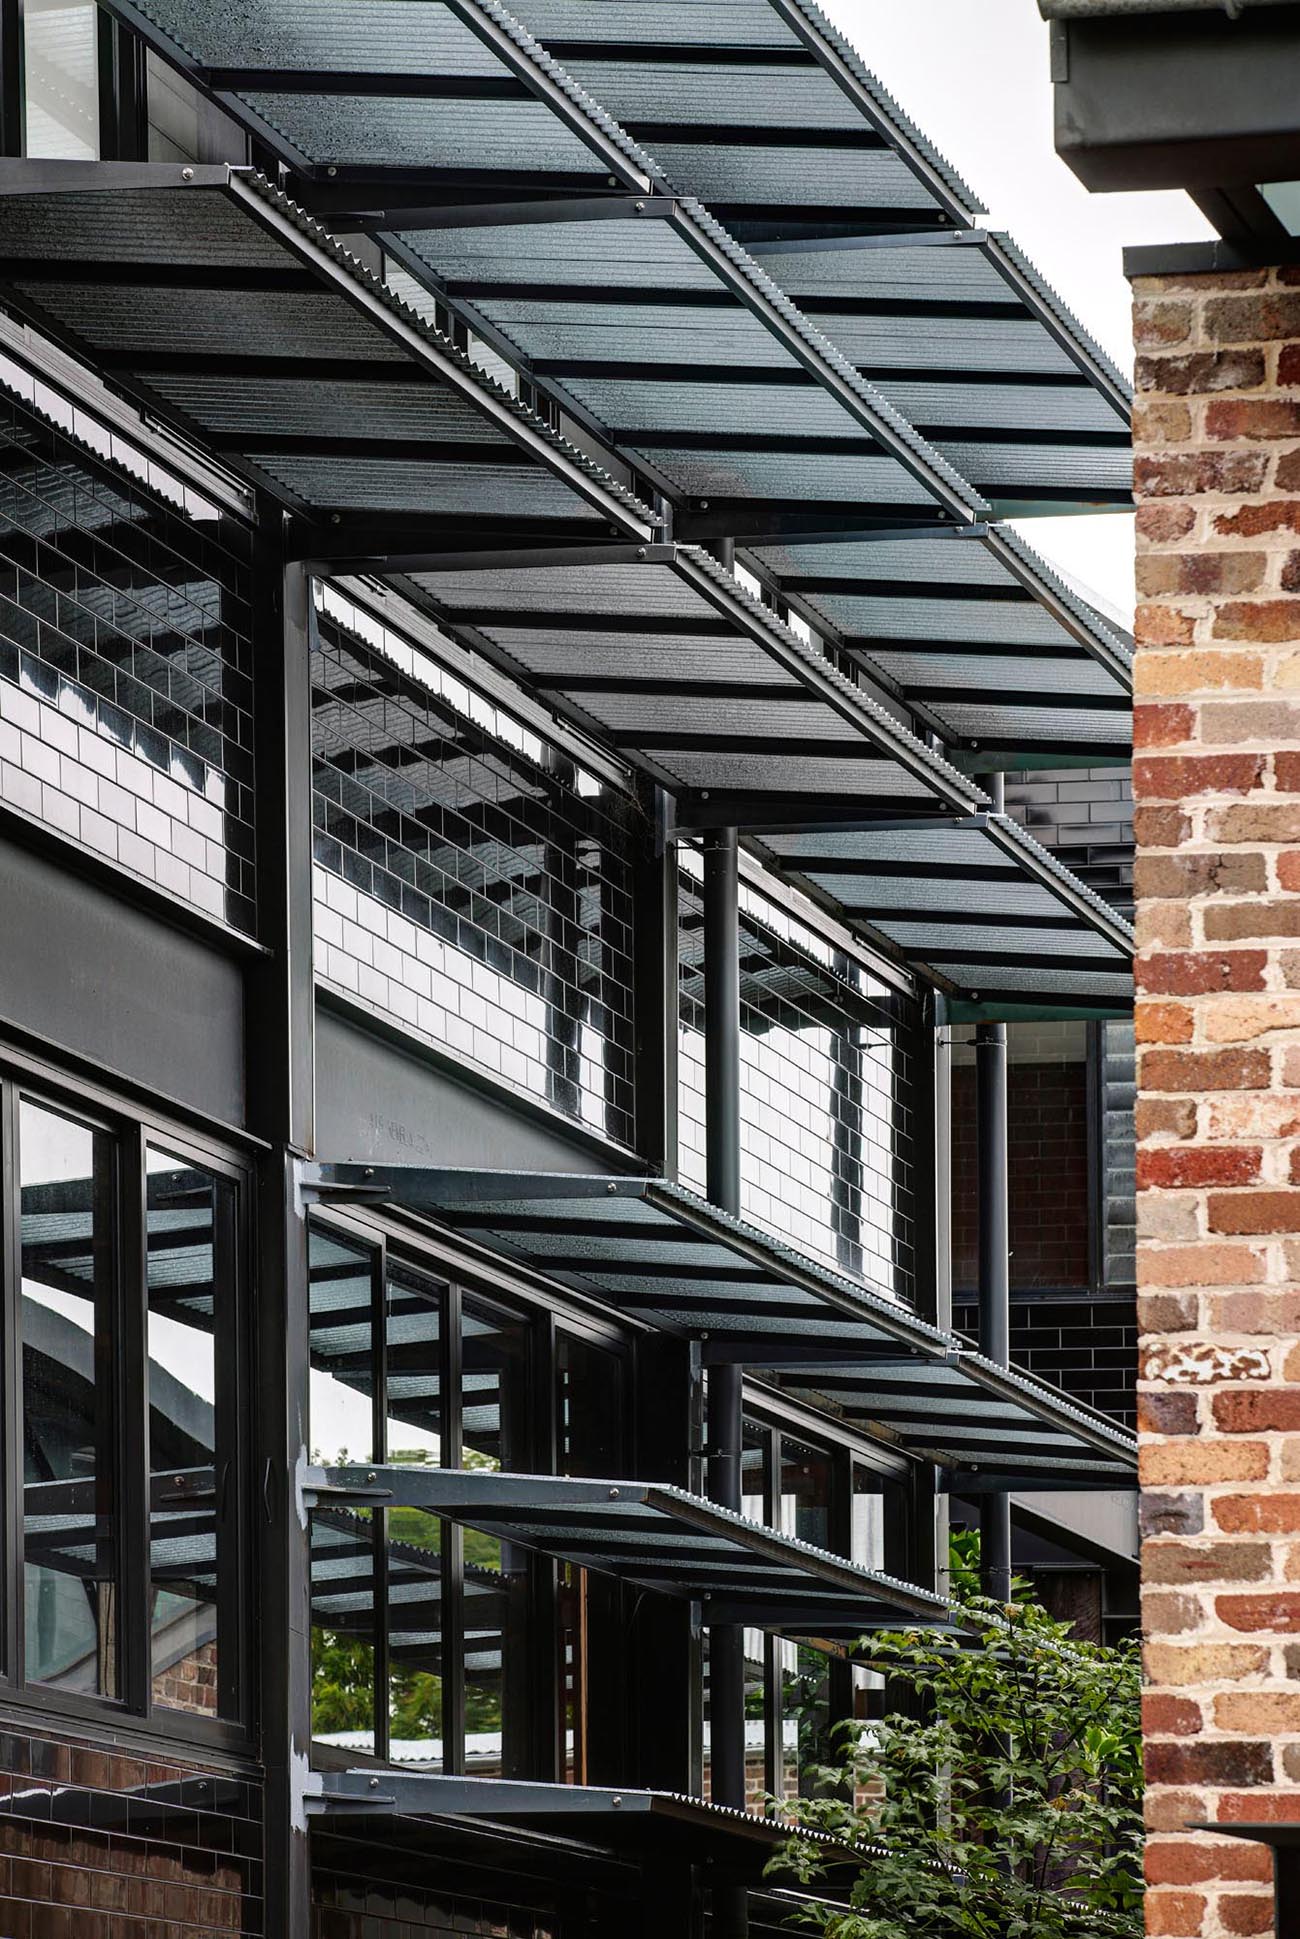 This modern home showcases an exterior of glazed black tiles